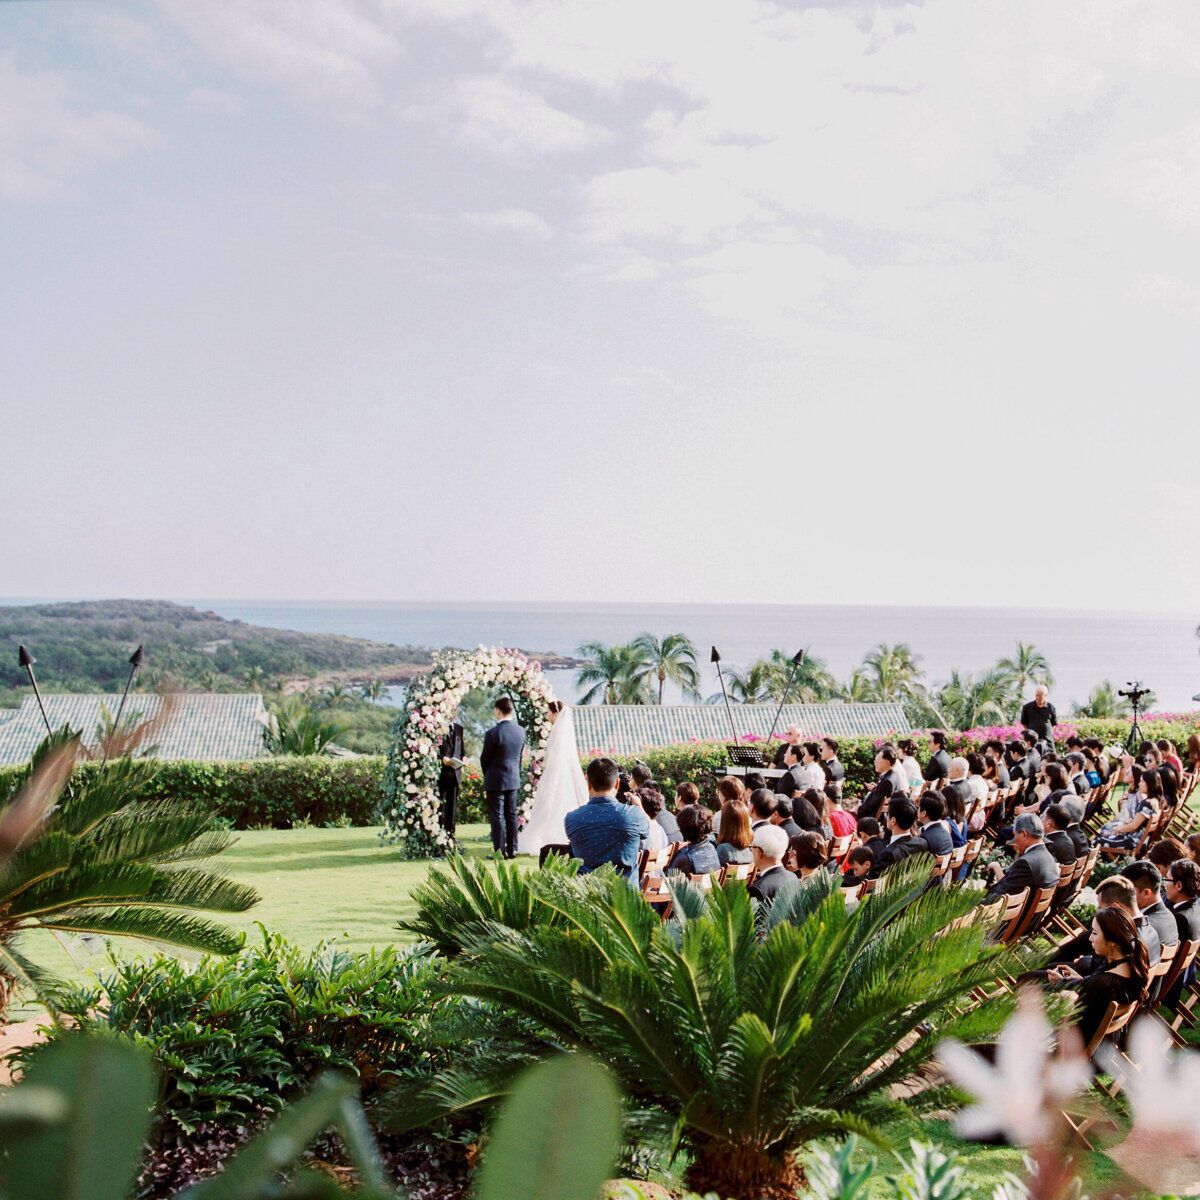 Wedding venue ideas: Scenic wedding venue Four Seasons Resort Lanai, ceremony overlooking the ocean and coast line 